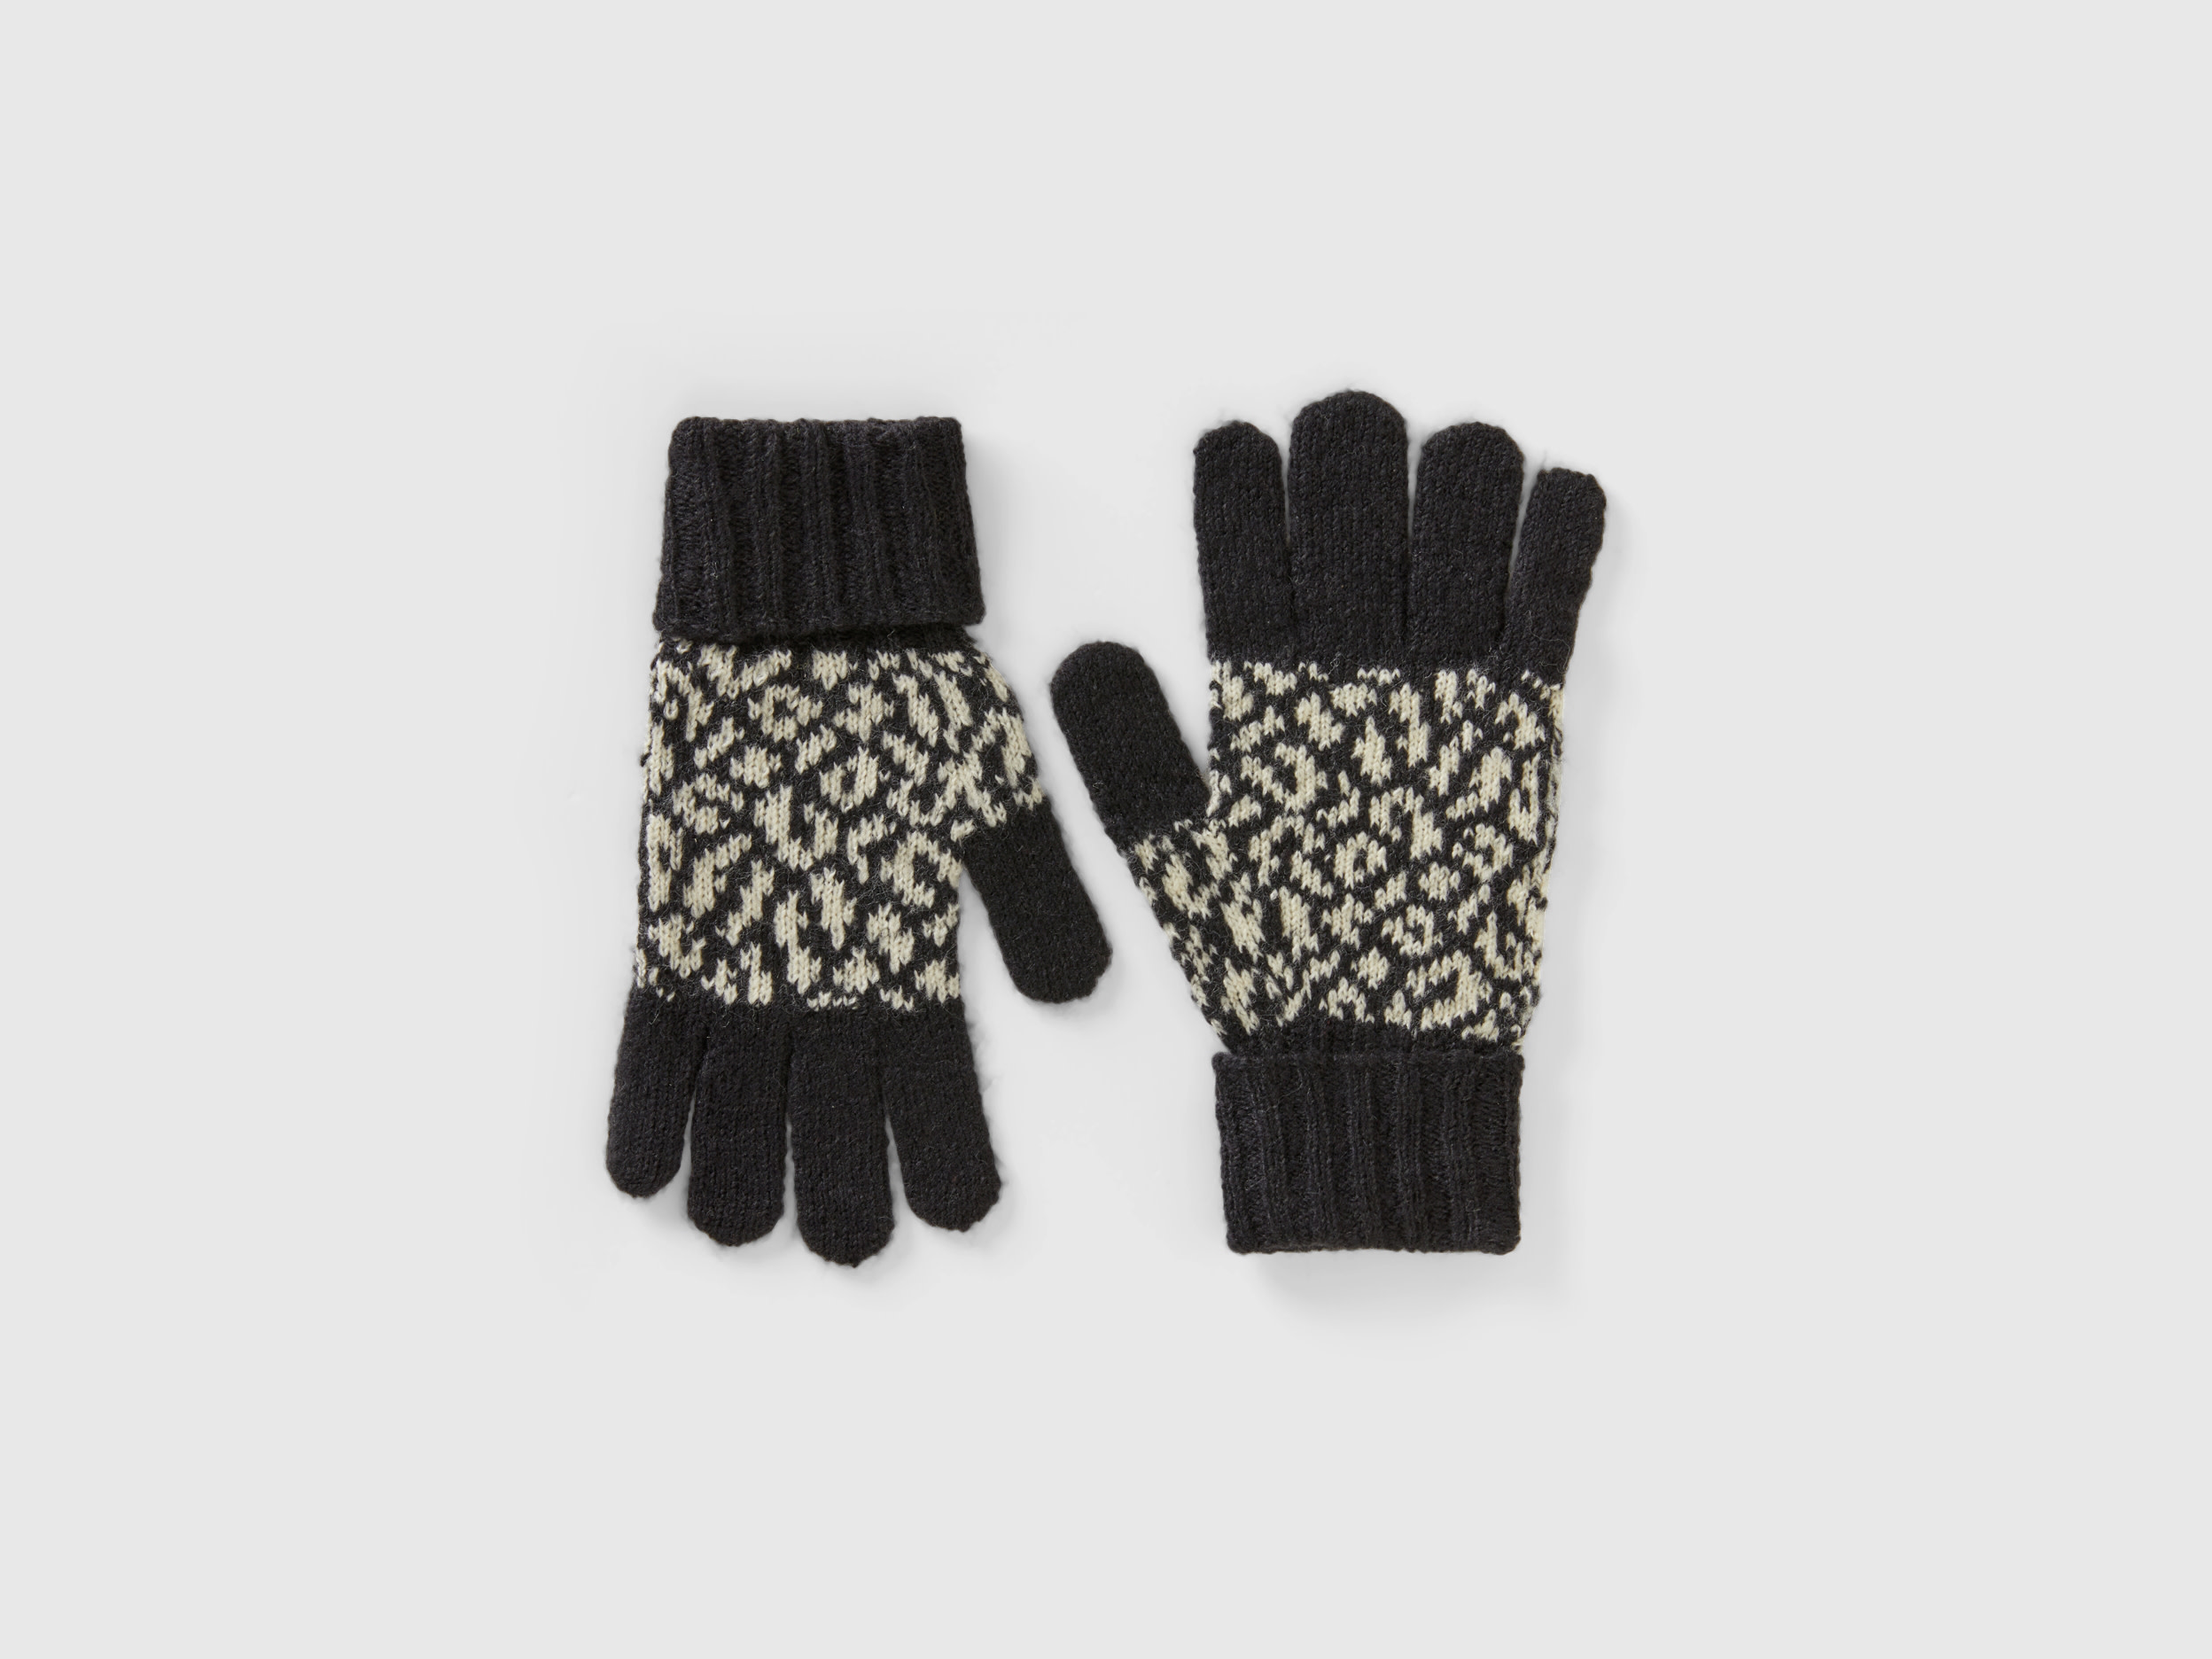 Benetton, Wool Blend Animal Print Gloves, size S-L, Multi-color, Kids